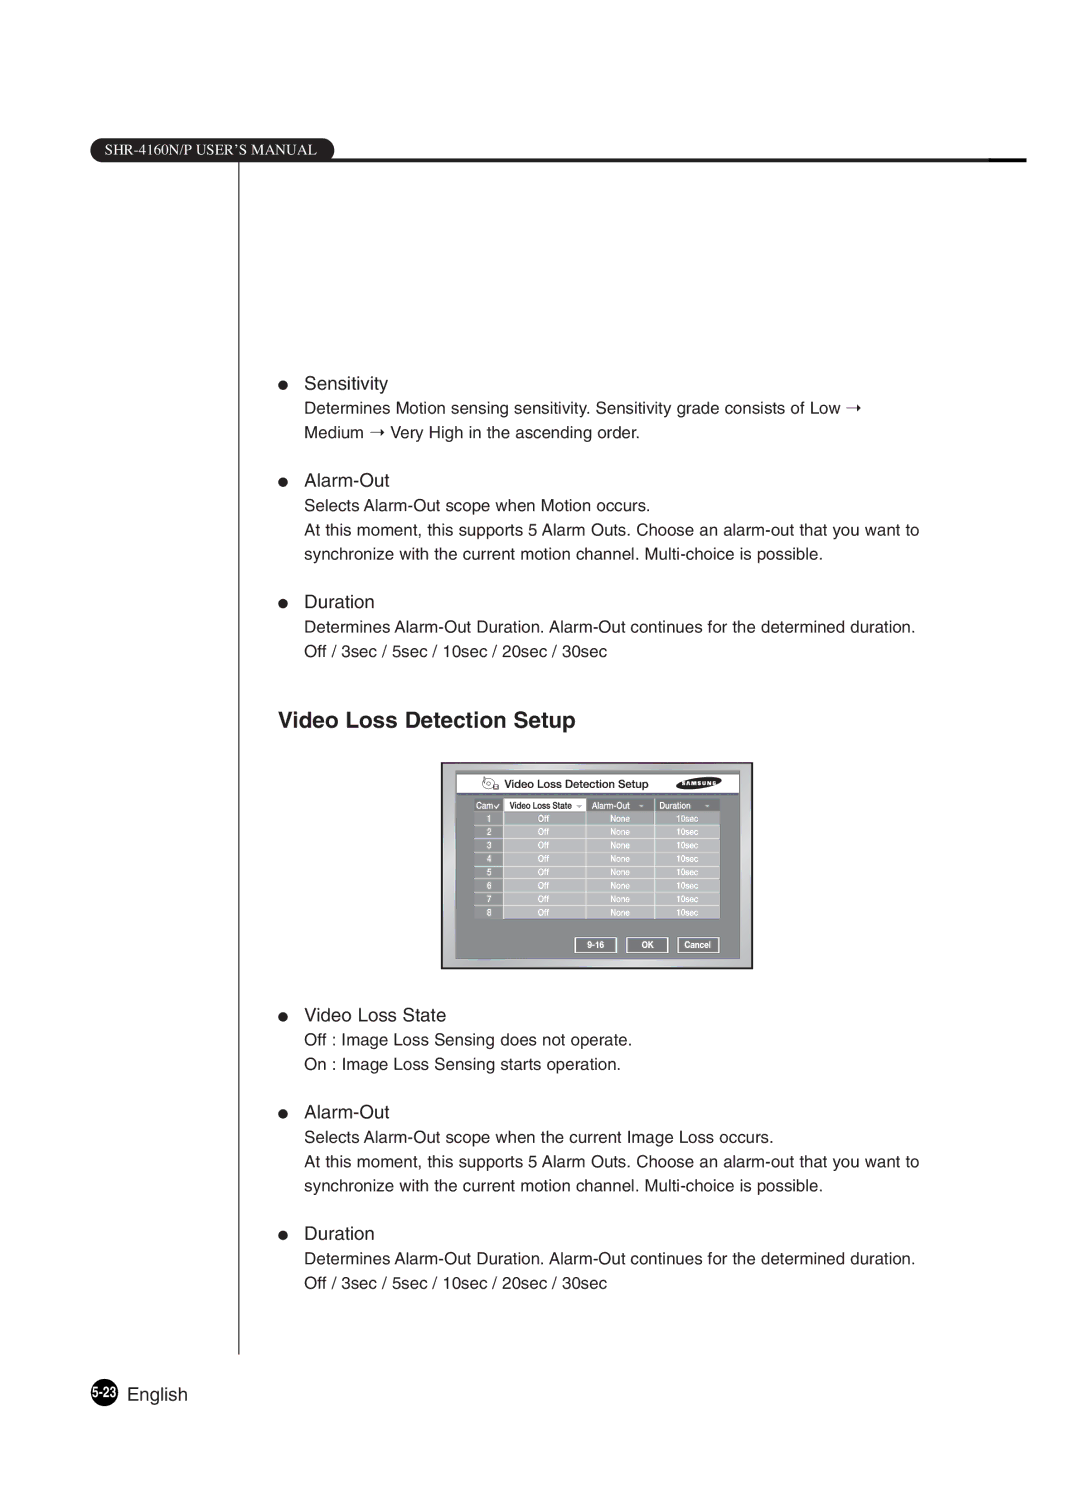 Samsung SHR-4160P manual Sensitivity, Alarm-Out, Duration, Video Loss State, 23English 